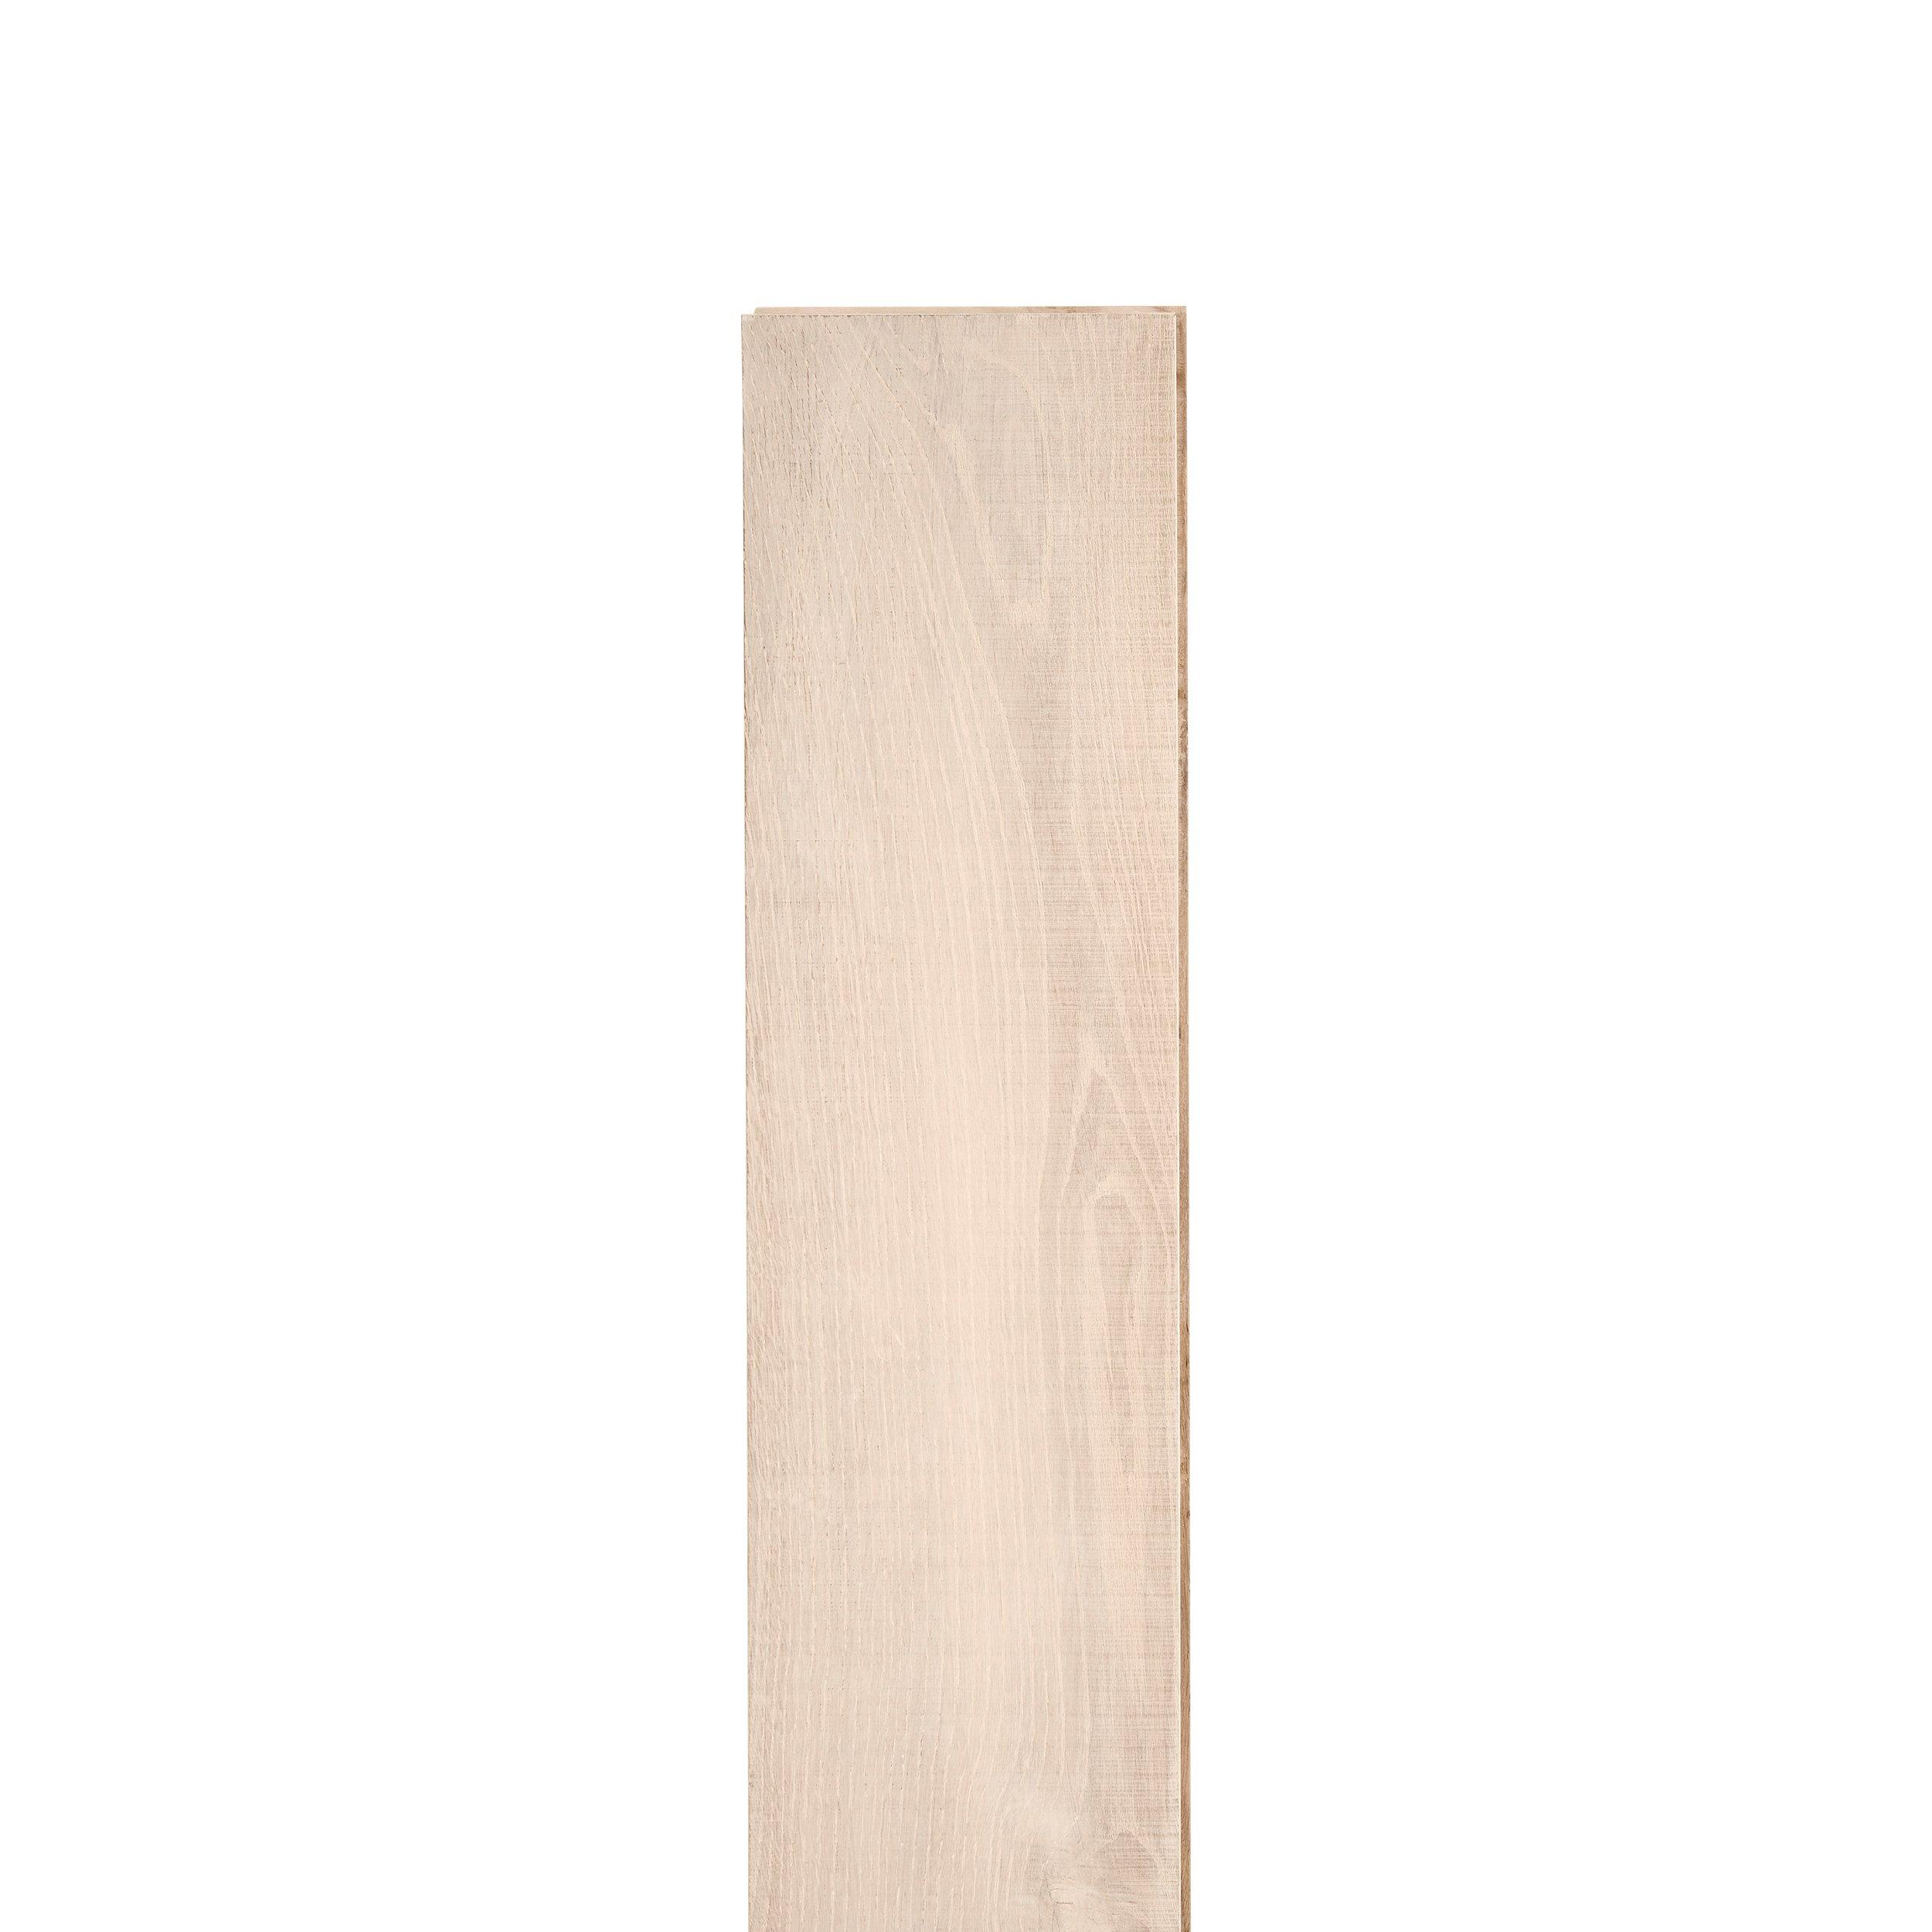 Shallowford White Oak Distressed Engineered Hardwood